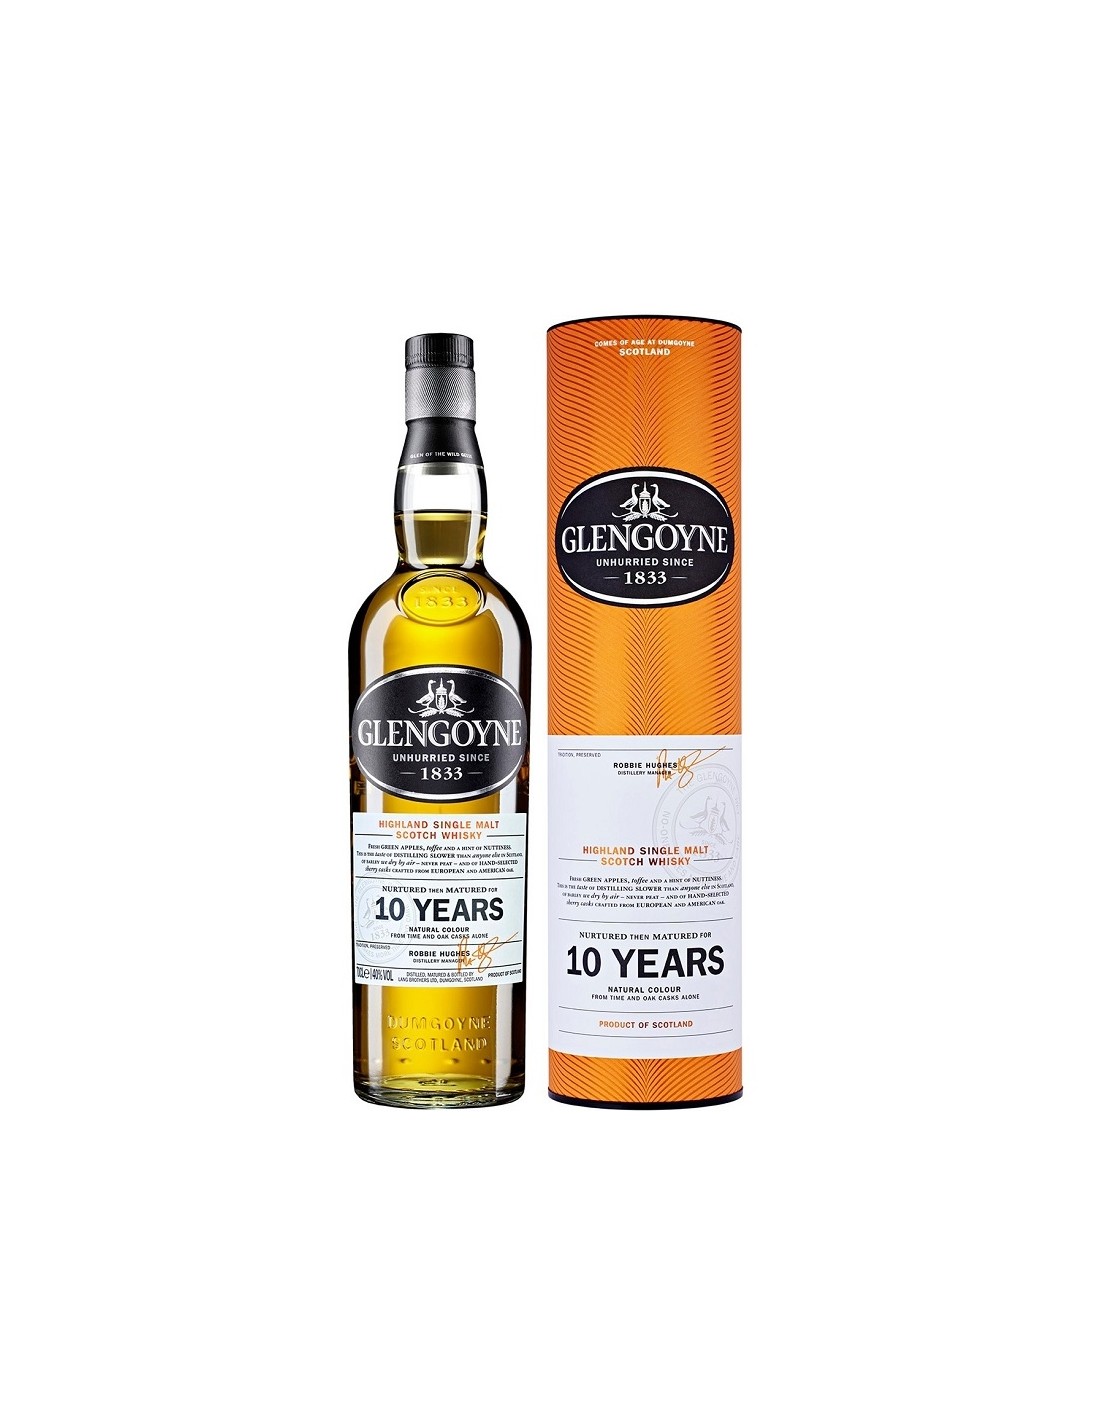 Whisky Glengoyne, 0.7L, 10 ani, 40% alc., Scotia alcooldiscount.ro